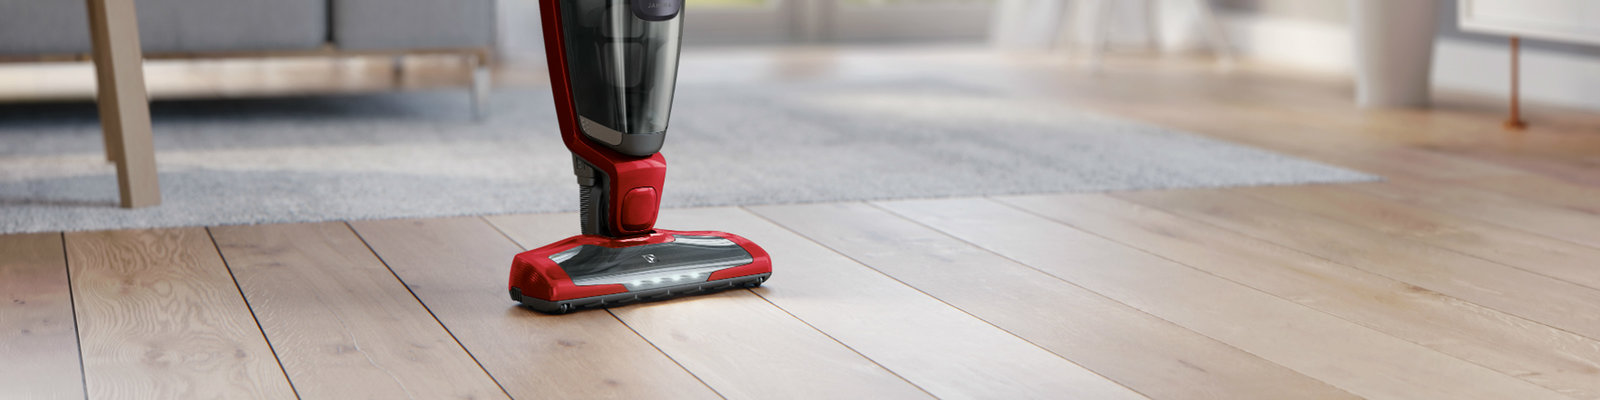 Best Vacuum Cleaner For Hard Floors And, Best Hardwood Floors Vacuum